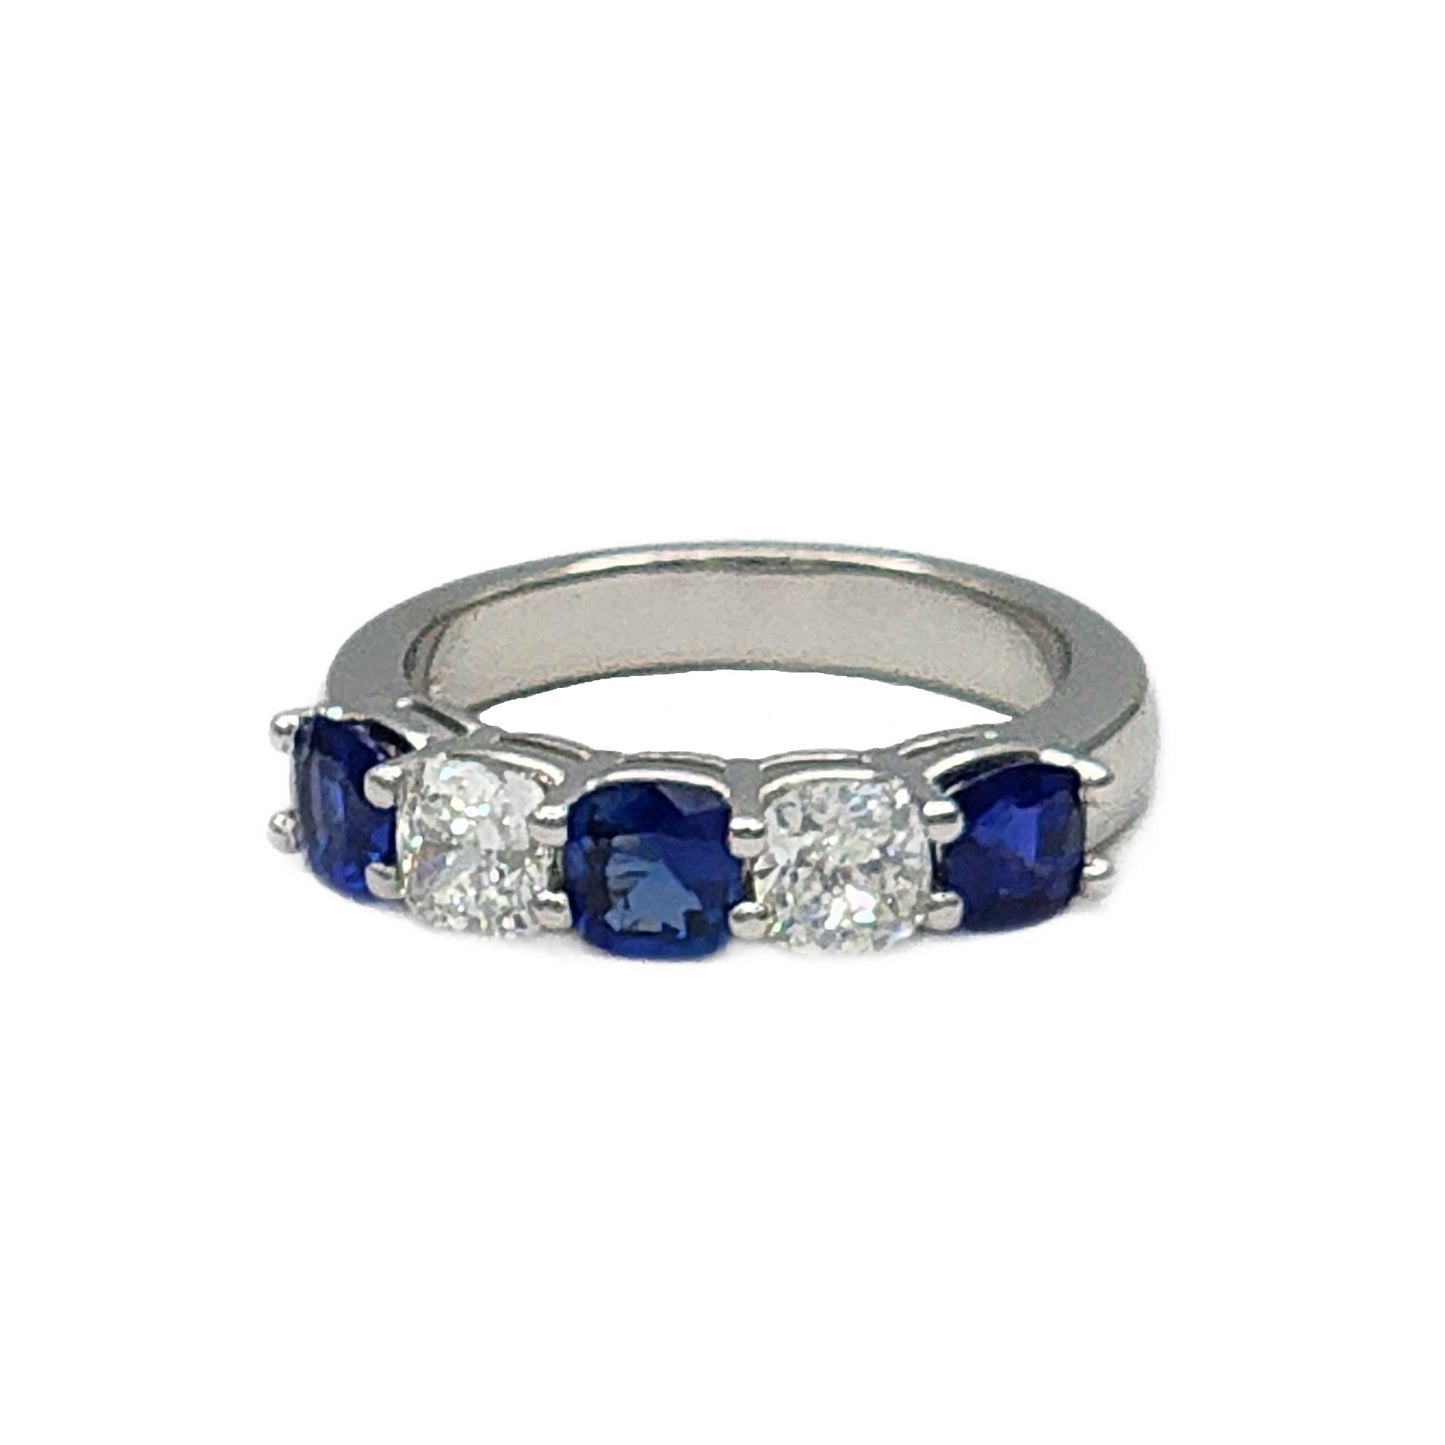 3=1.46 Carat Cushion Cut Blue Sapphire and 2=1.04 Carat Cushion Cut Diamond Ring in Platinum, GIA Reports